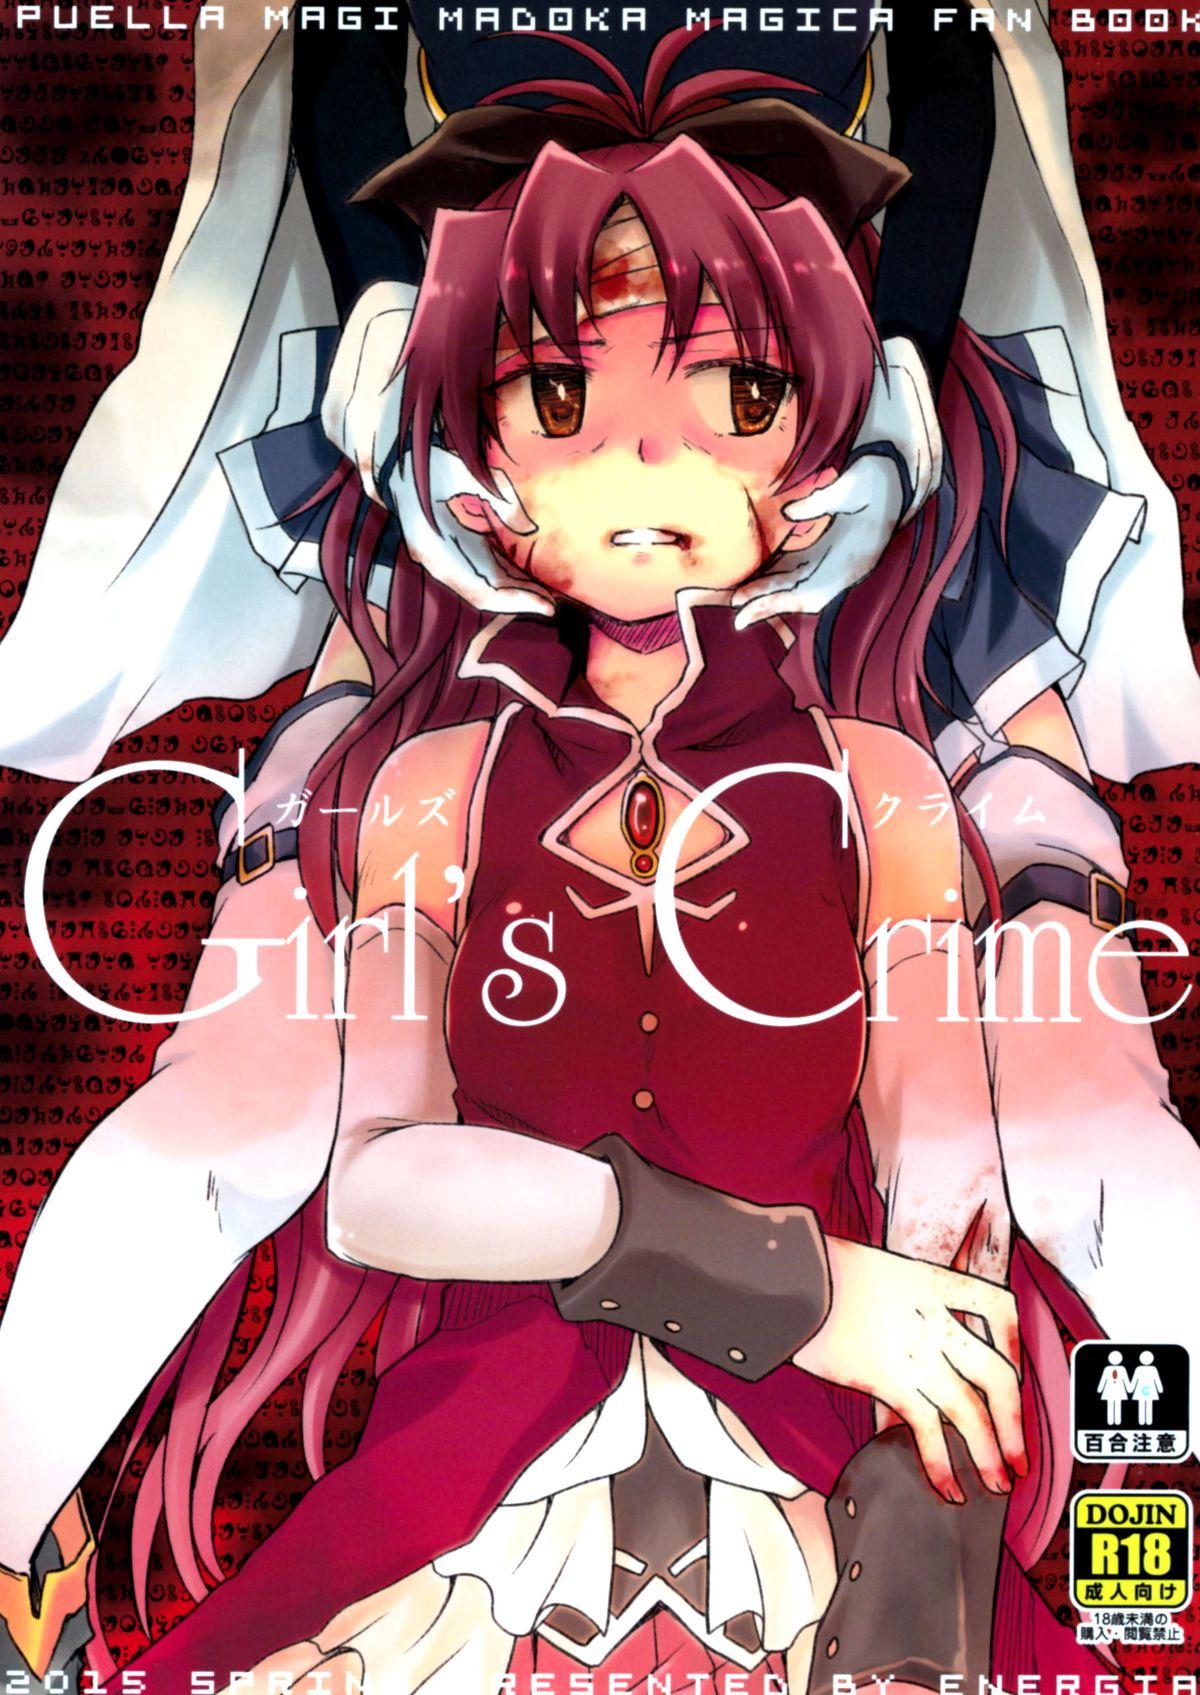 Chudai Girl's Crime - Puella magi madoka magica Goth - Picture 1